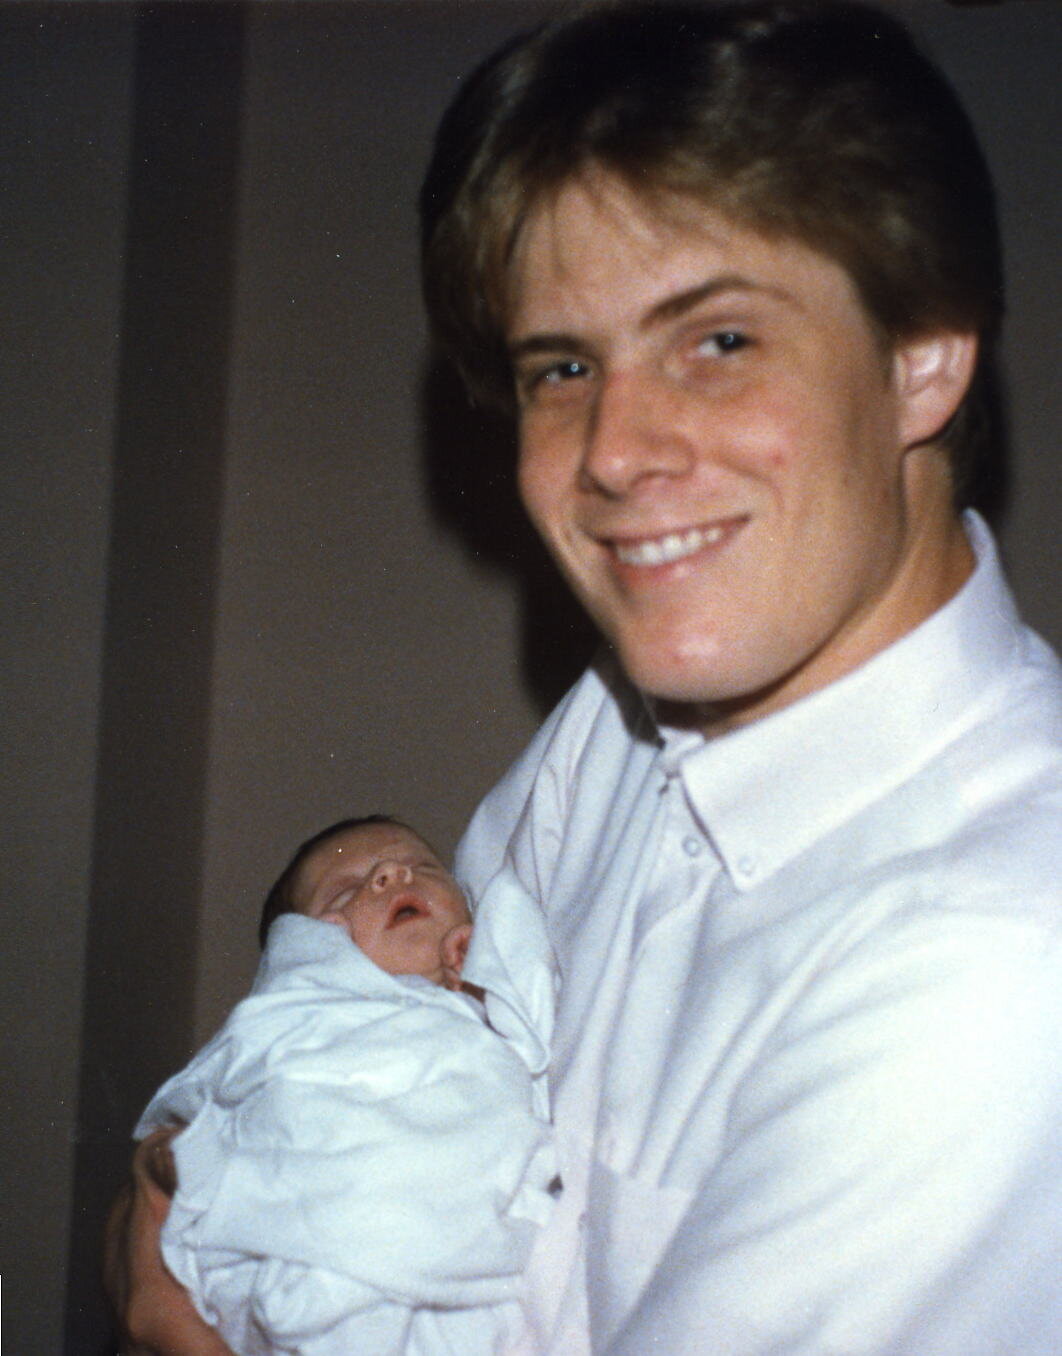 Chris-baby Chad 1988.jpg